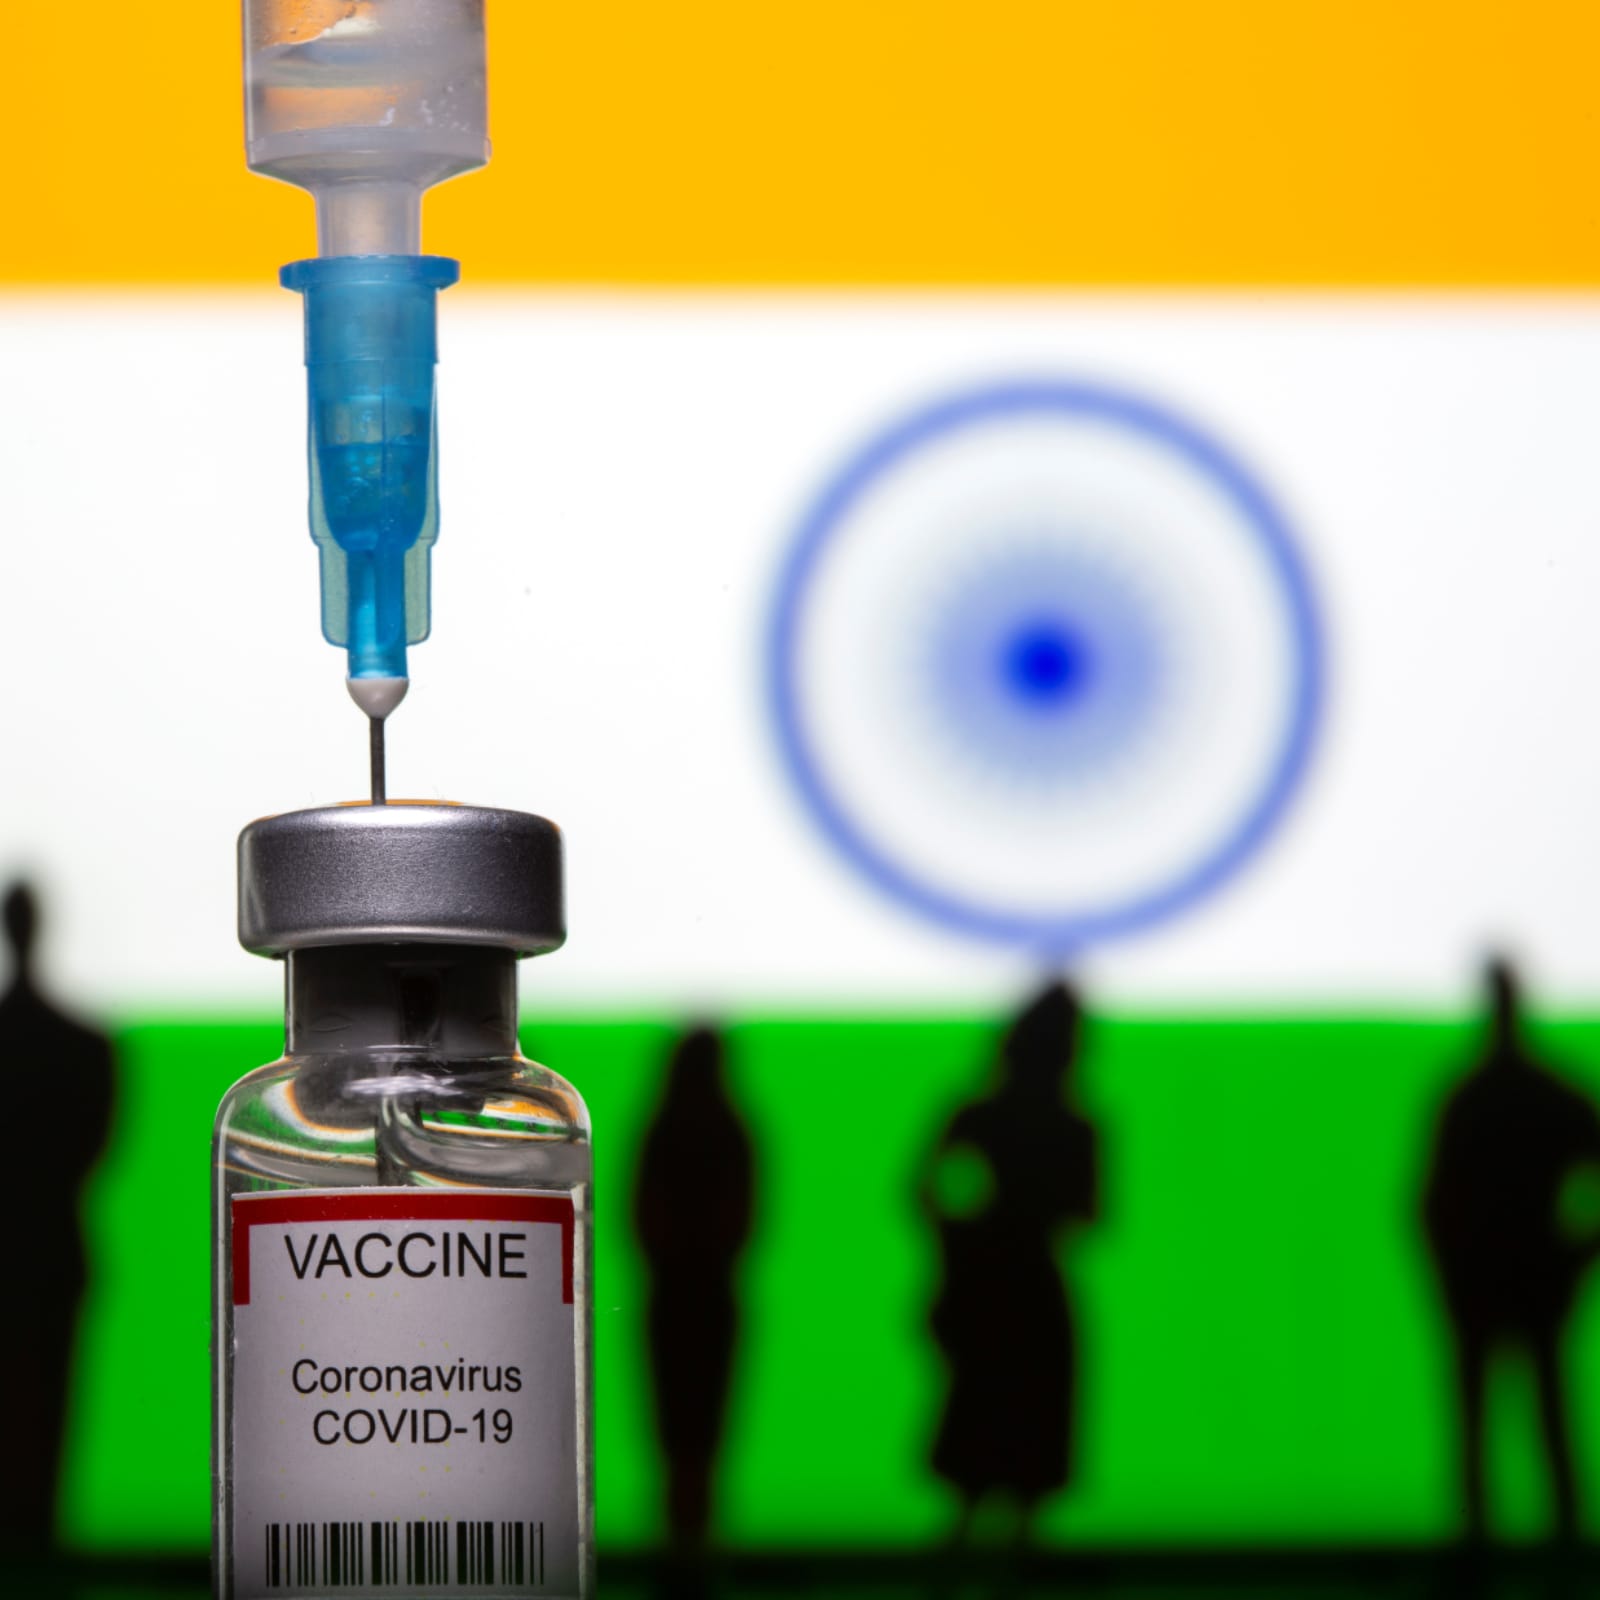 100 crore vaccine doses